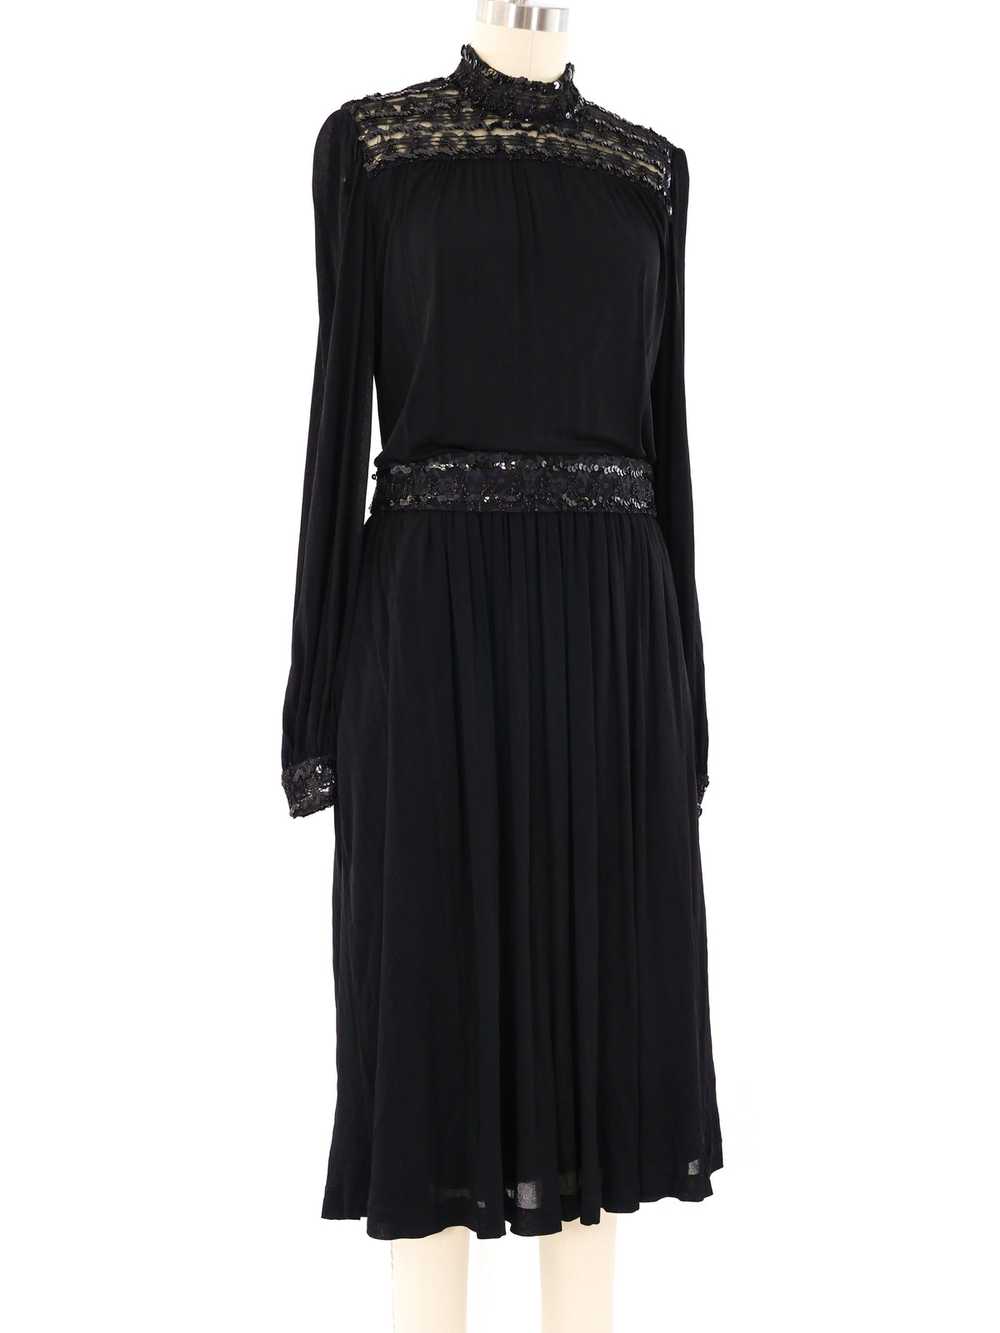 Pierre Cardin Sequin Trimmed Chiffon Dress - image 3